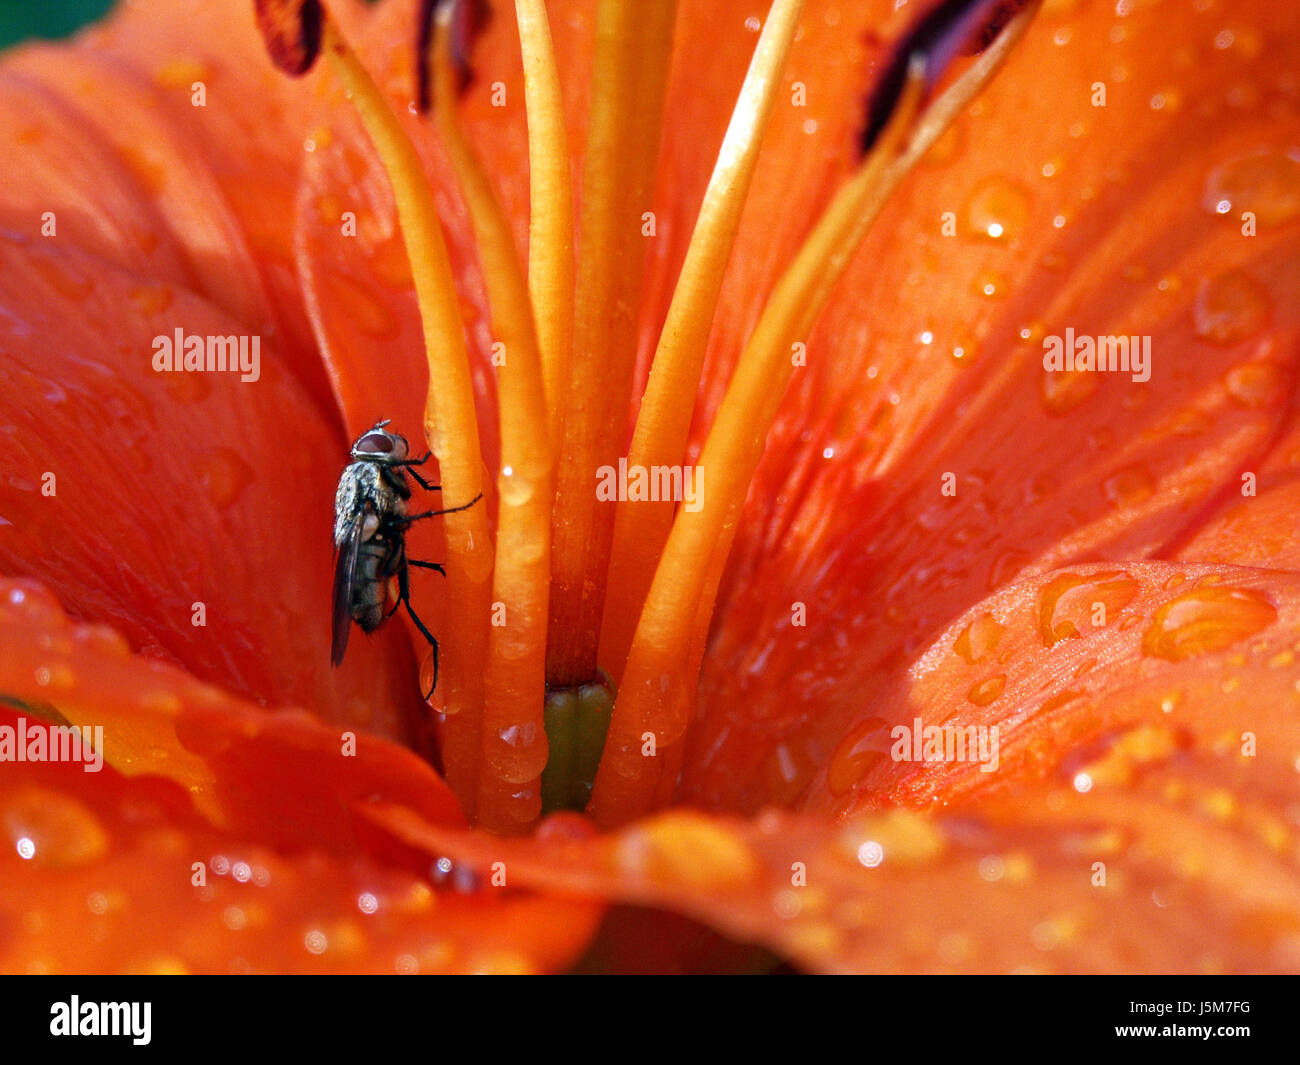 orange drink drinking bibs insect flower plant bloom blossom flourish Stock Photo